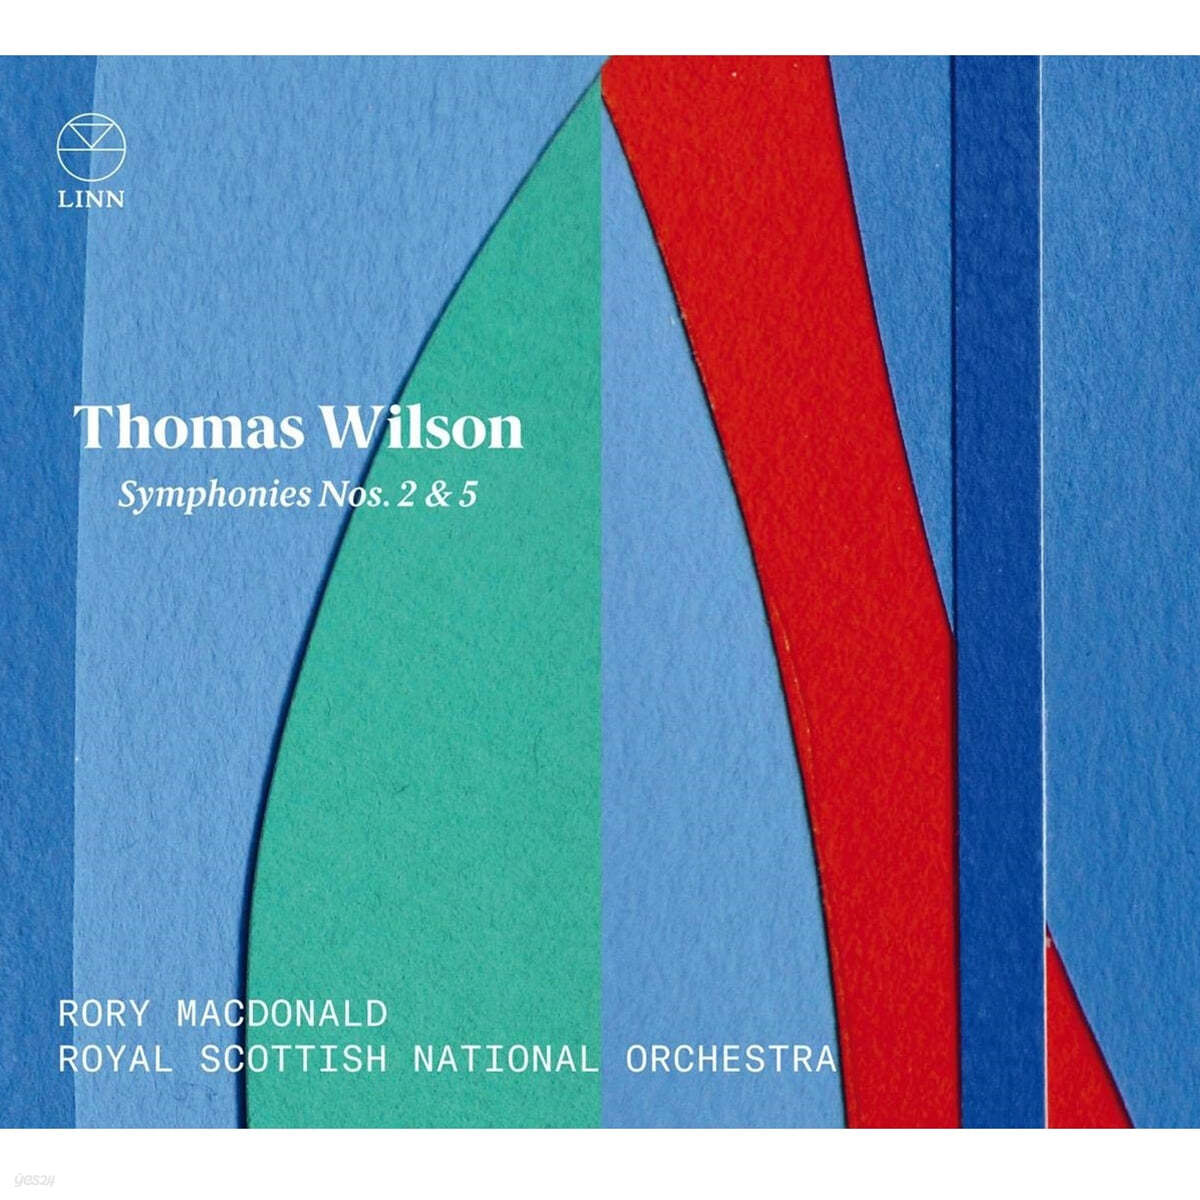 Rory Macdonald 토마스 윌슨: 교향곡 2, 5번 (Thomas Wilson: Symphonies Nos. 2, 5) 